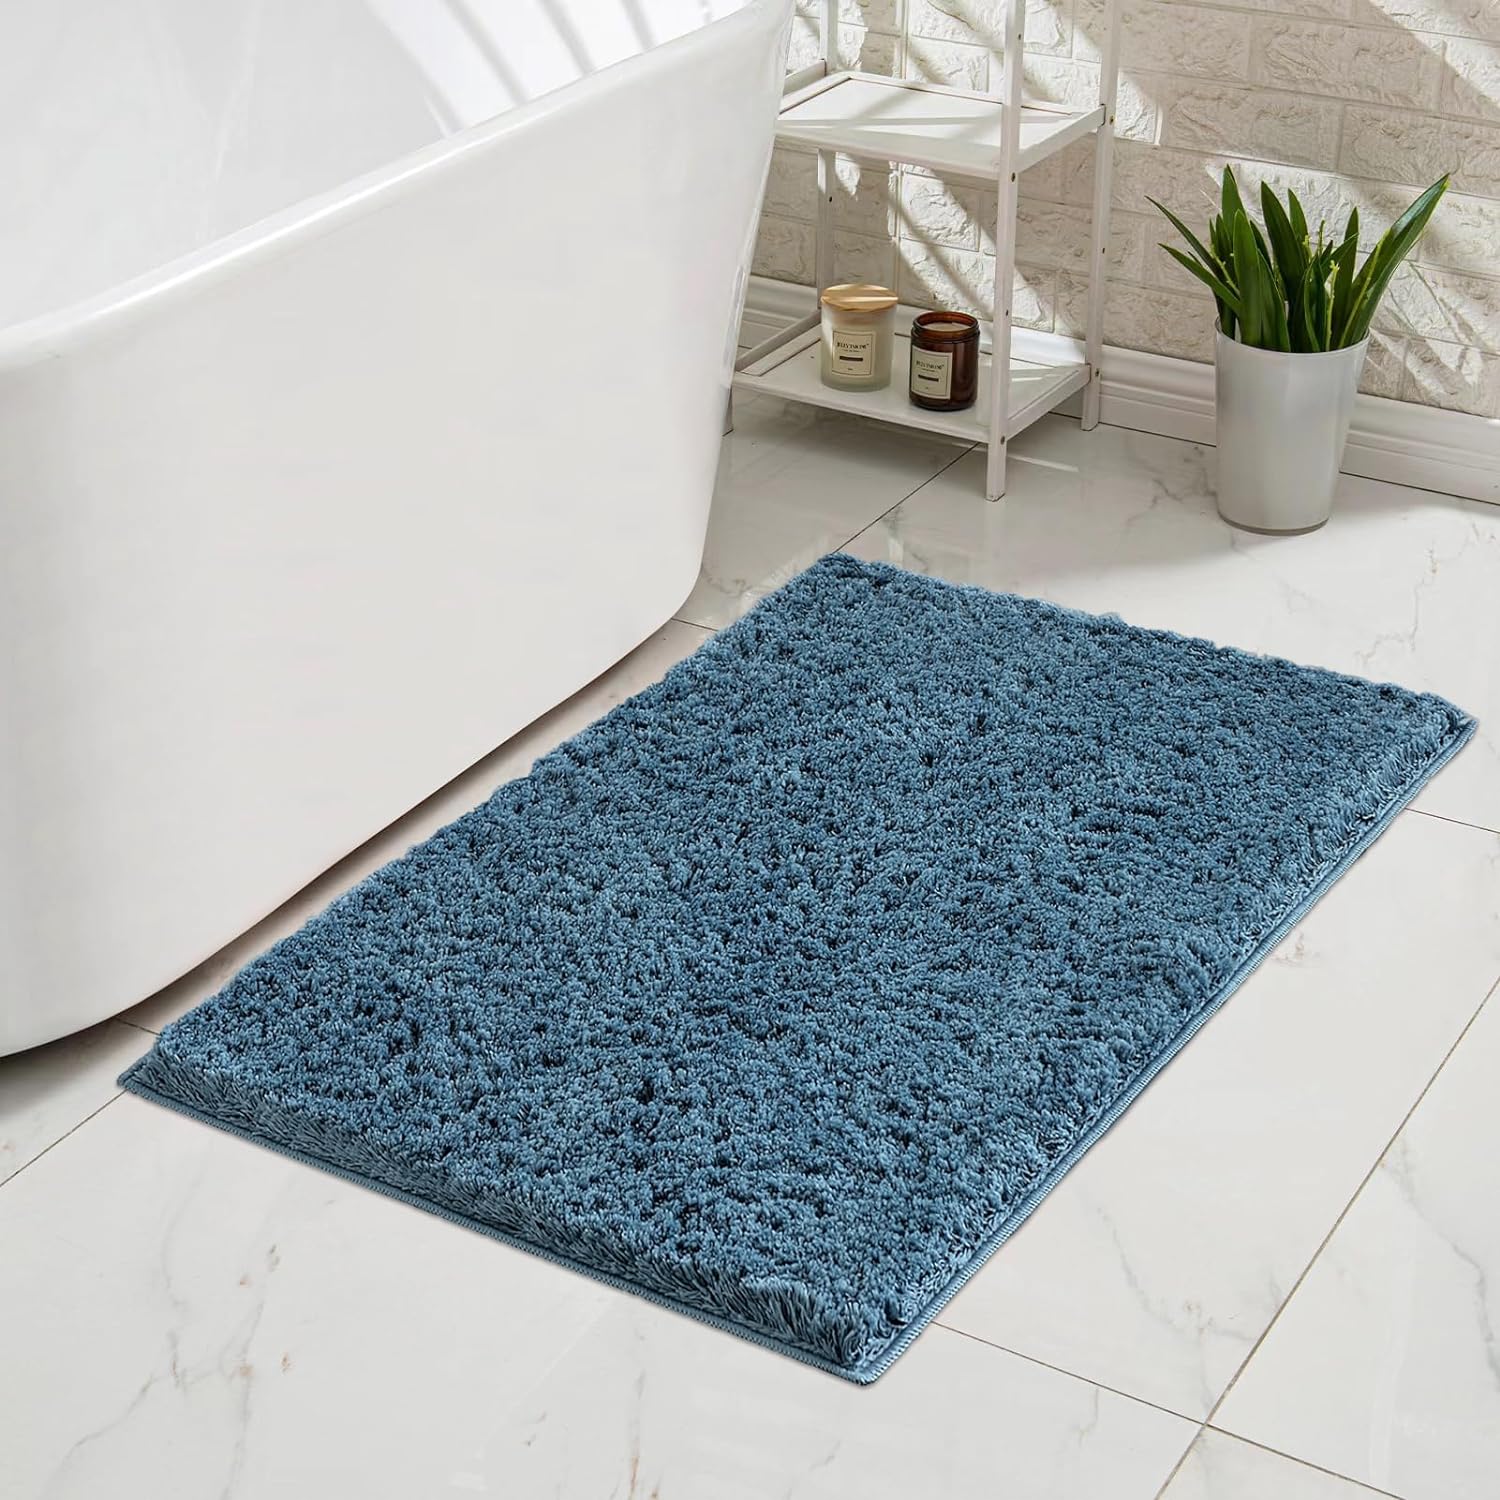 CozeCube Dusty Blue Bath mats for Bathroom Non Slip, Ultra Soft Fluffy Shag Bath Rugs for Bathroom Washable, Plush Microfiber Area Rugs for Bedroom, 36 x 24